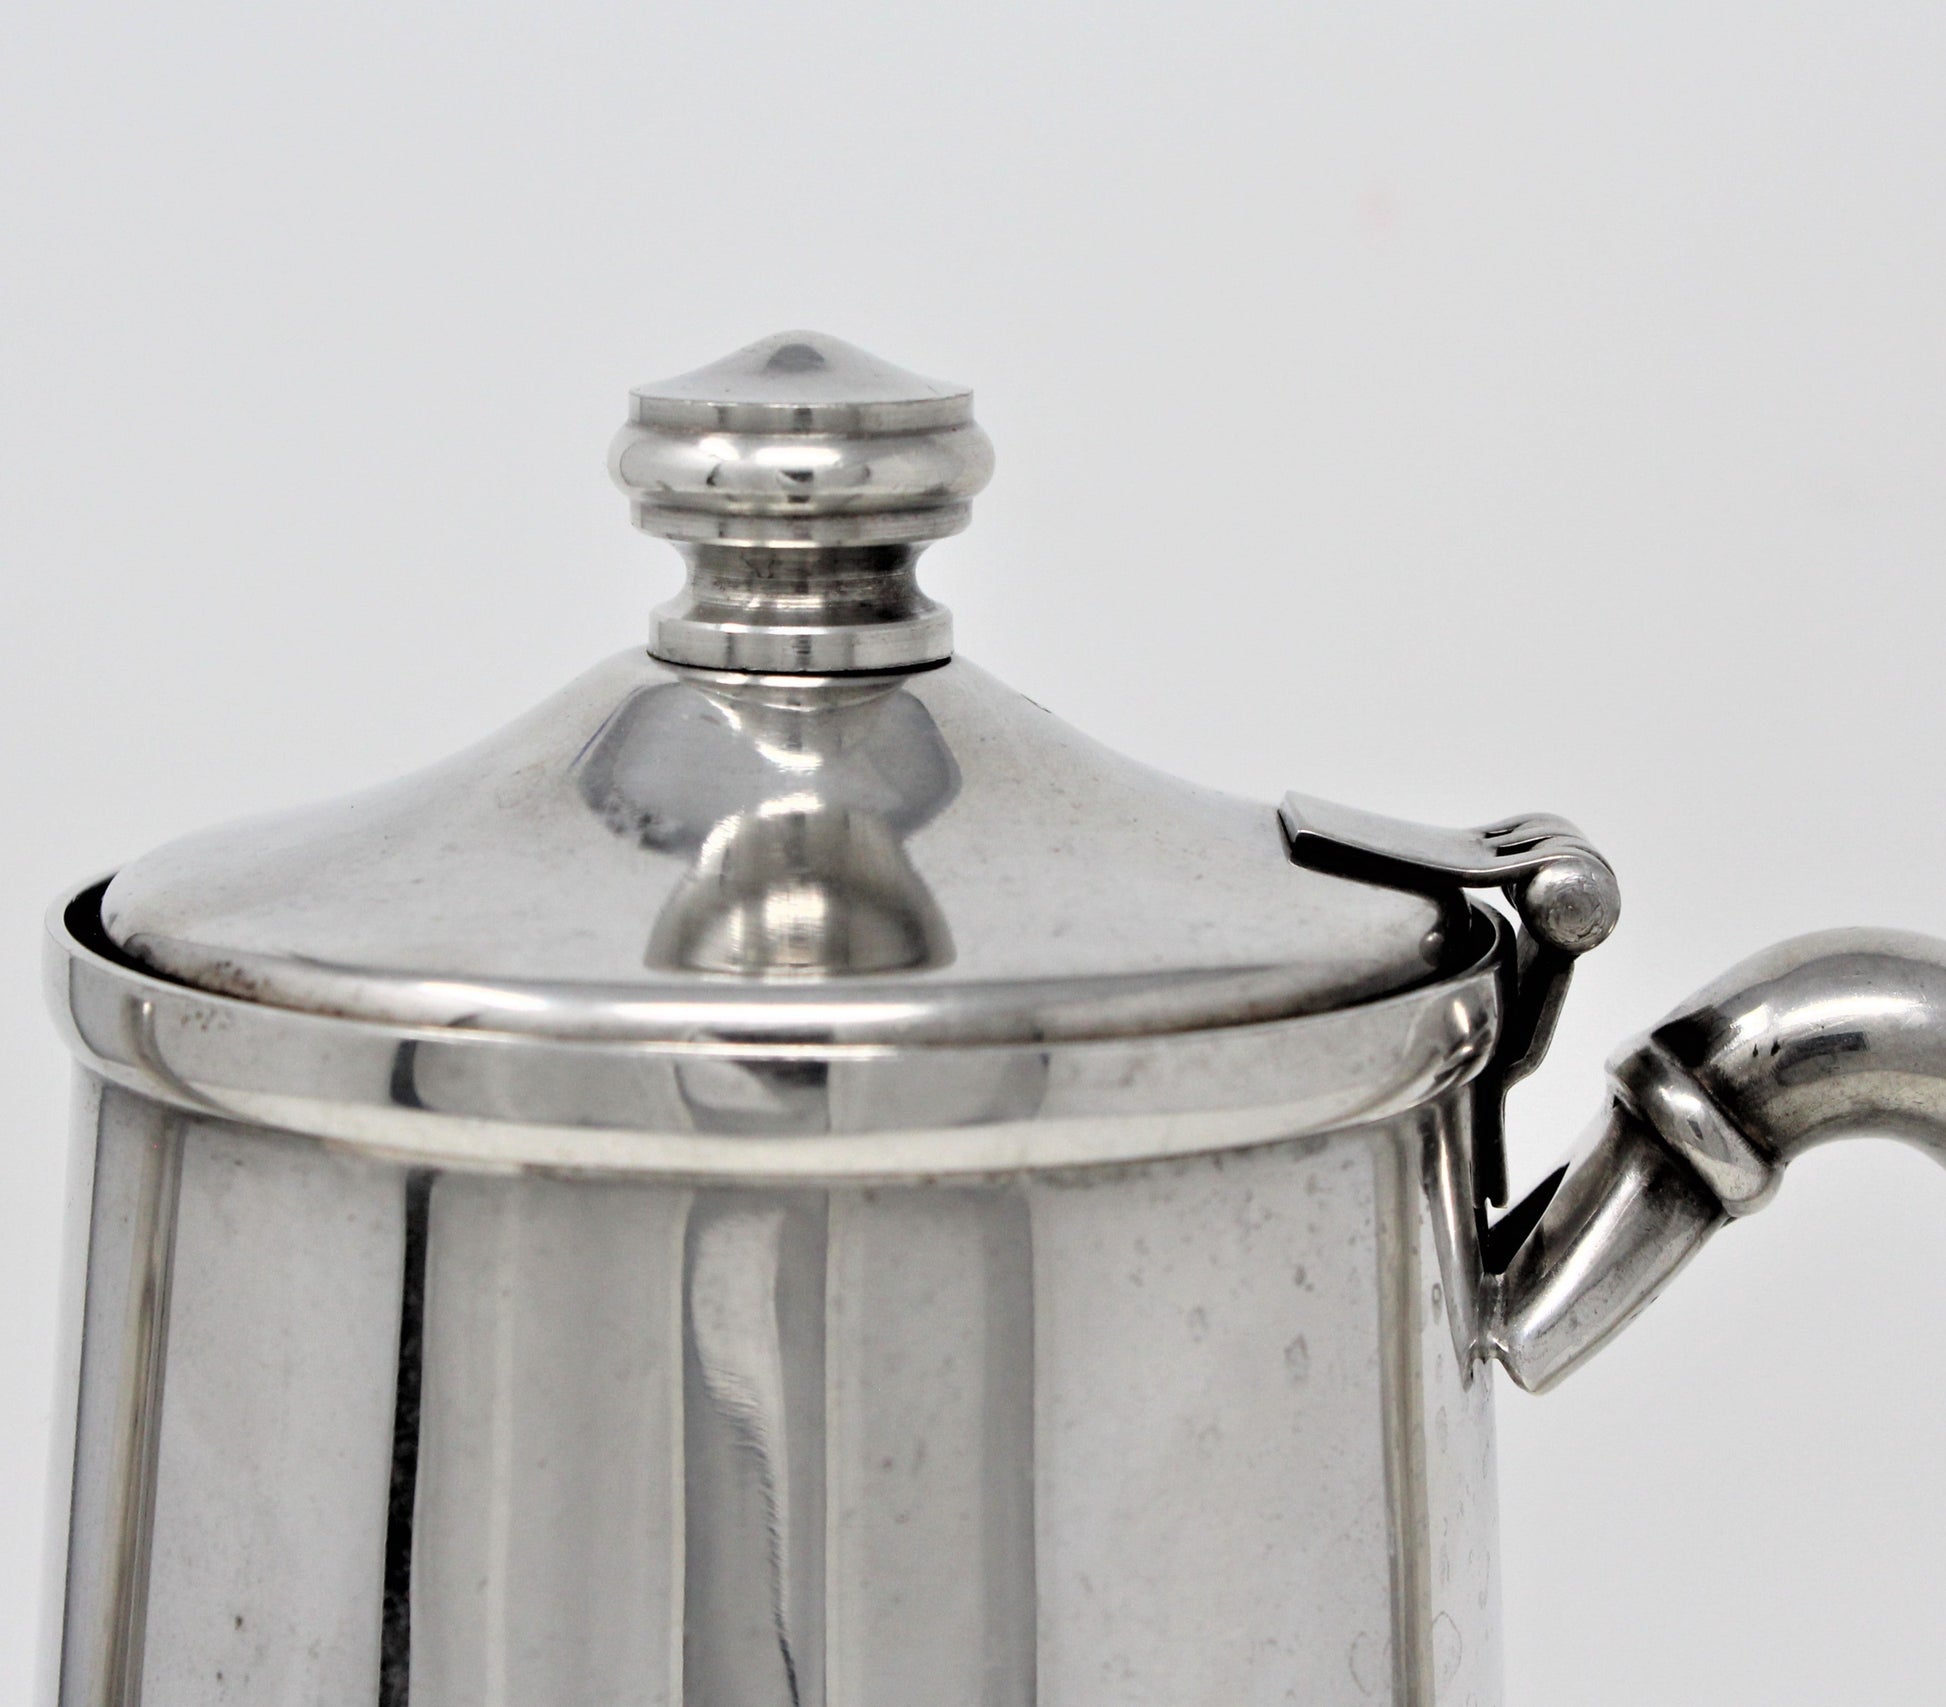 Vintage Large Aluminum Coffee Pot 1 Liter Tea Pot Silver